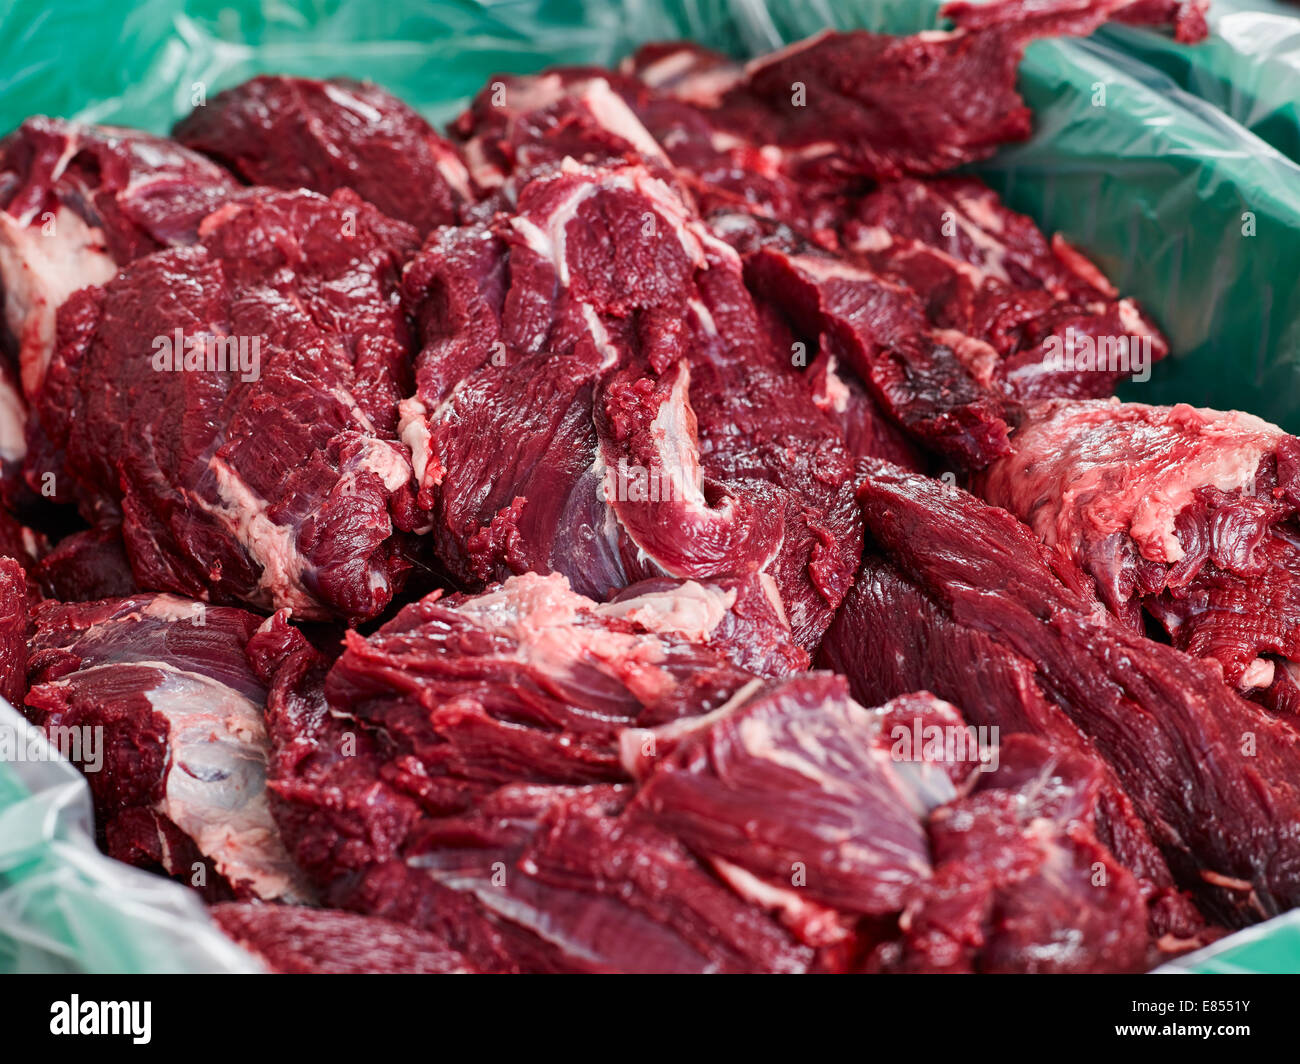 https://c8.alamy.com/comp/E8551Y/the-butcher-has-cut-bear-meat-already-cutted-meat-E8551Y.jpg